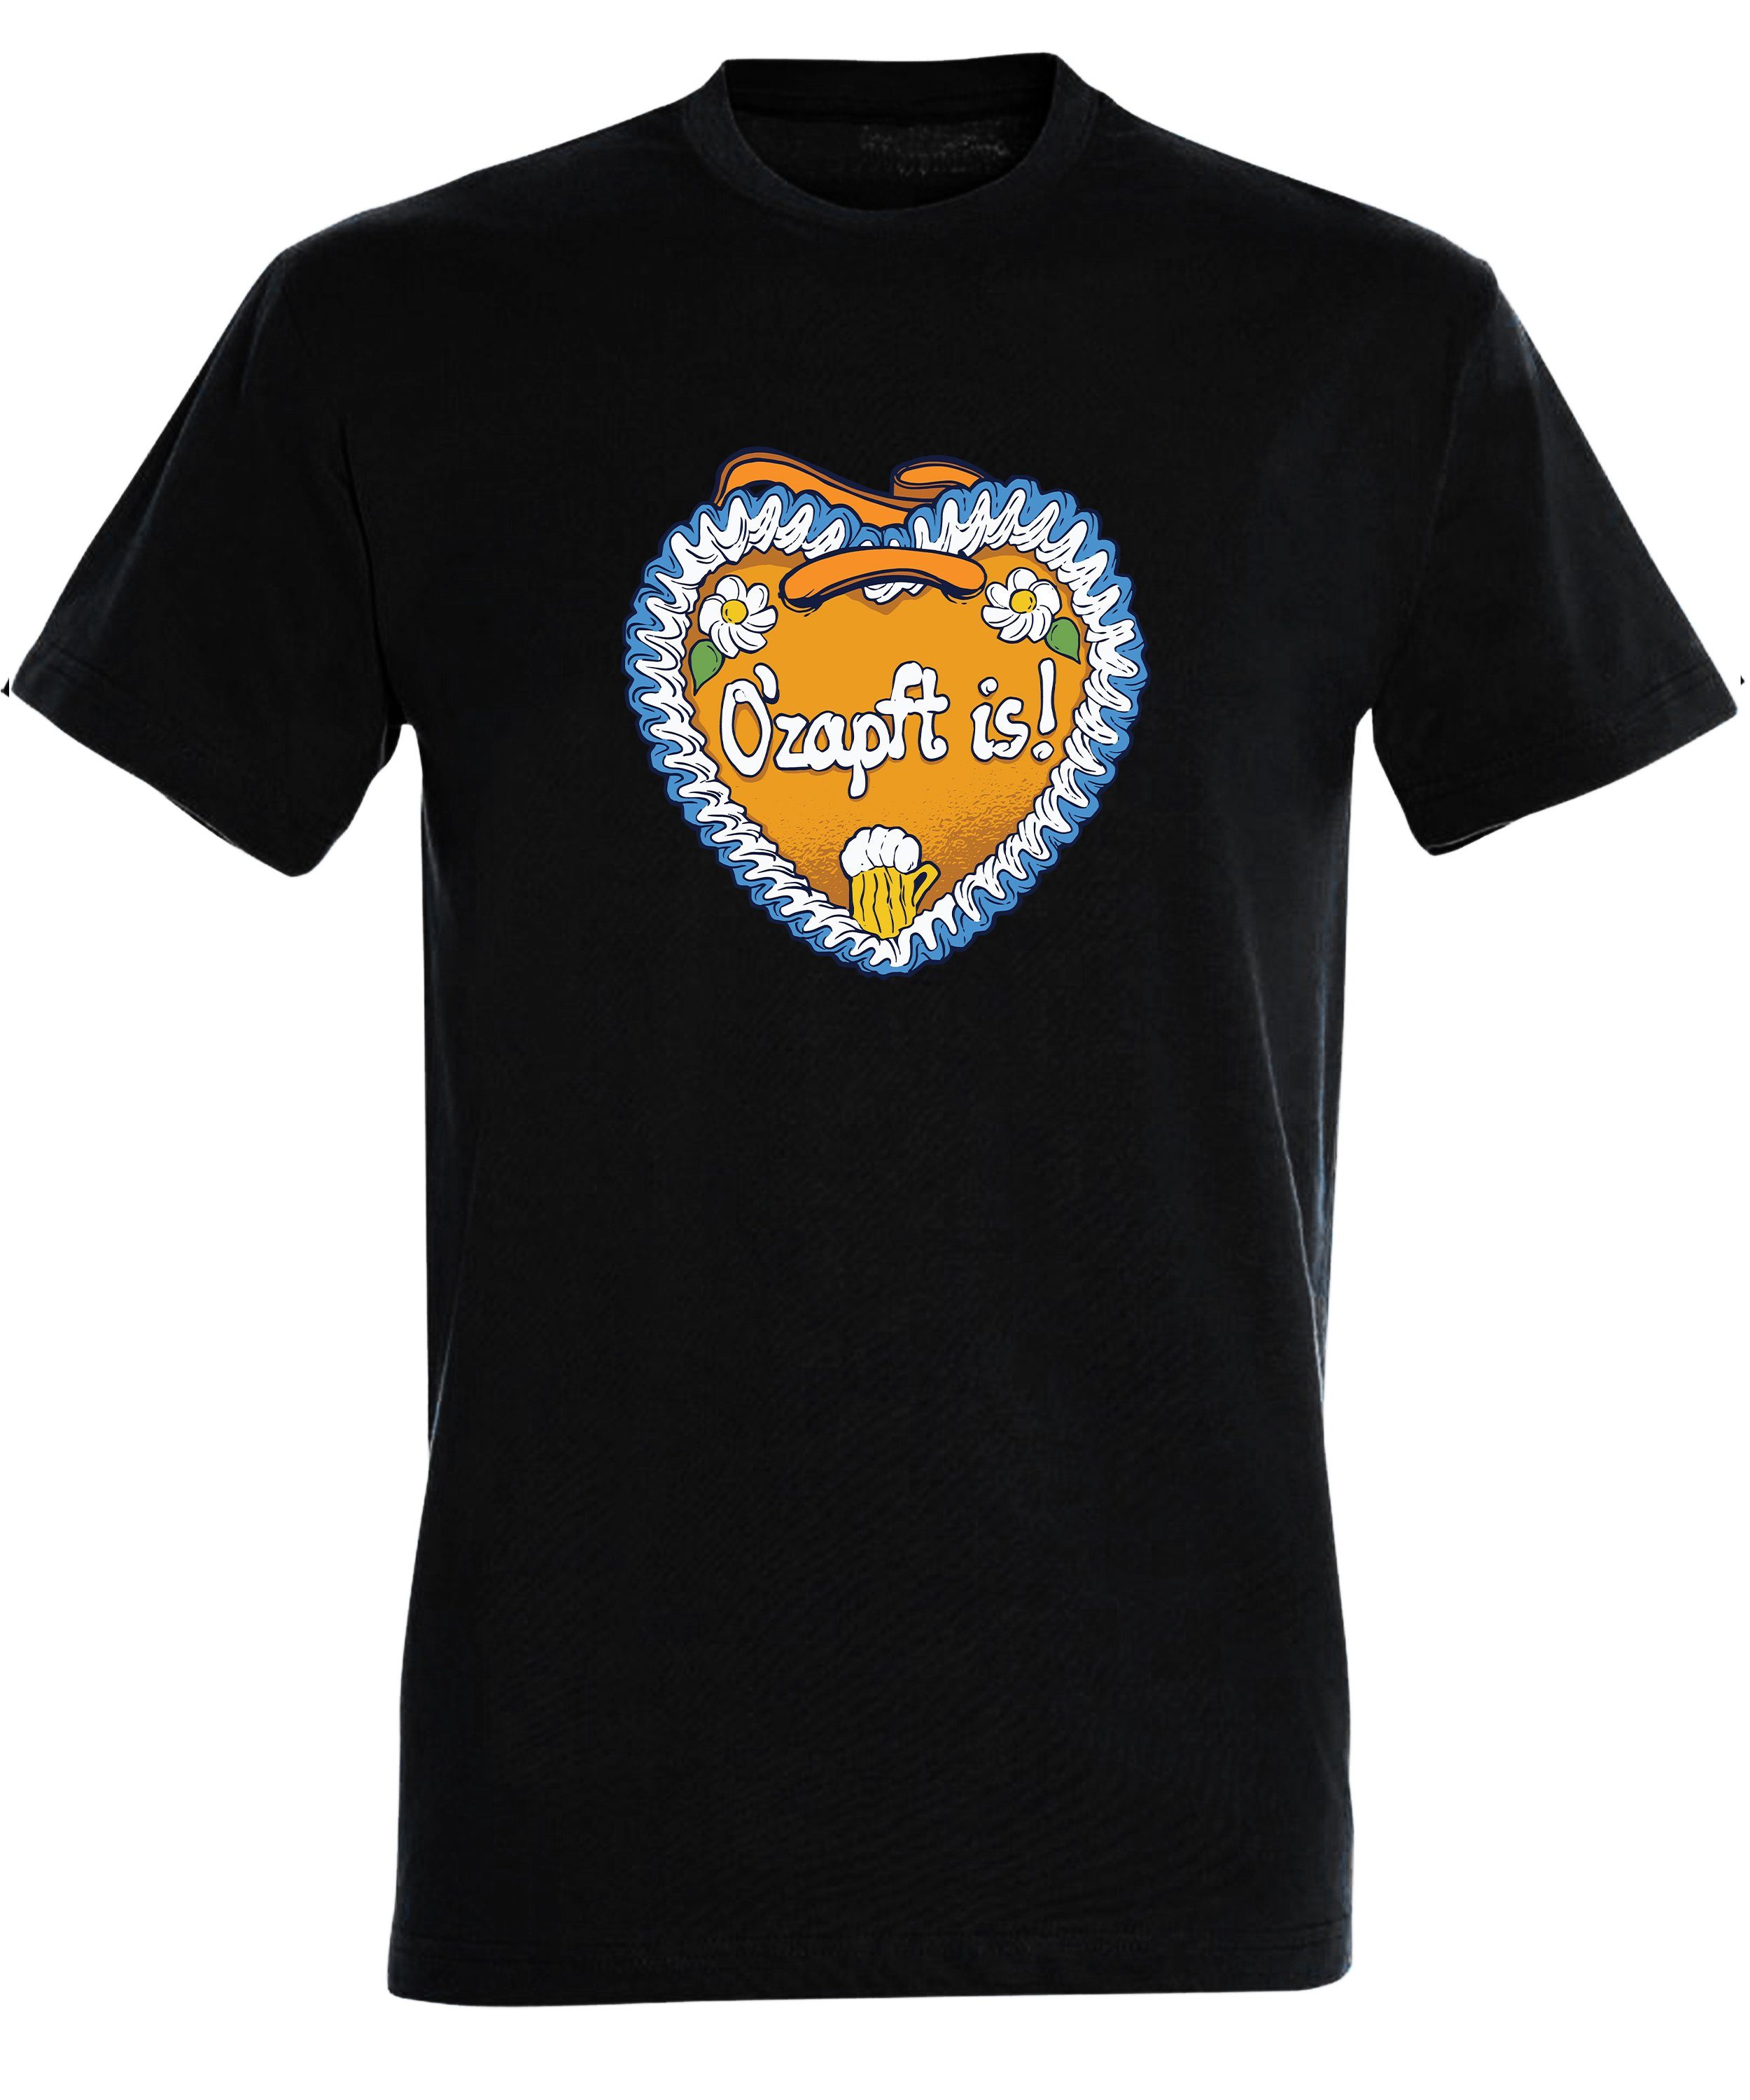 MyDesign24 T-Shirt Herren Fit, Print Trinkshirt O'Zapft mit Regular Fun is - Aufdruck Shirt i313 schwarz Baumwollshirt